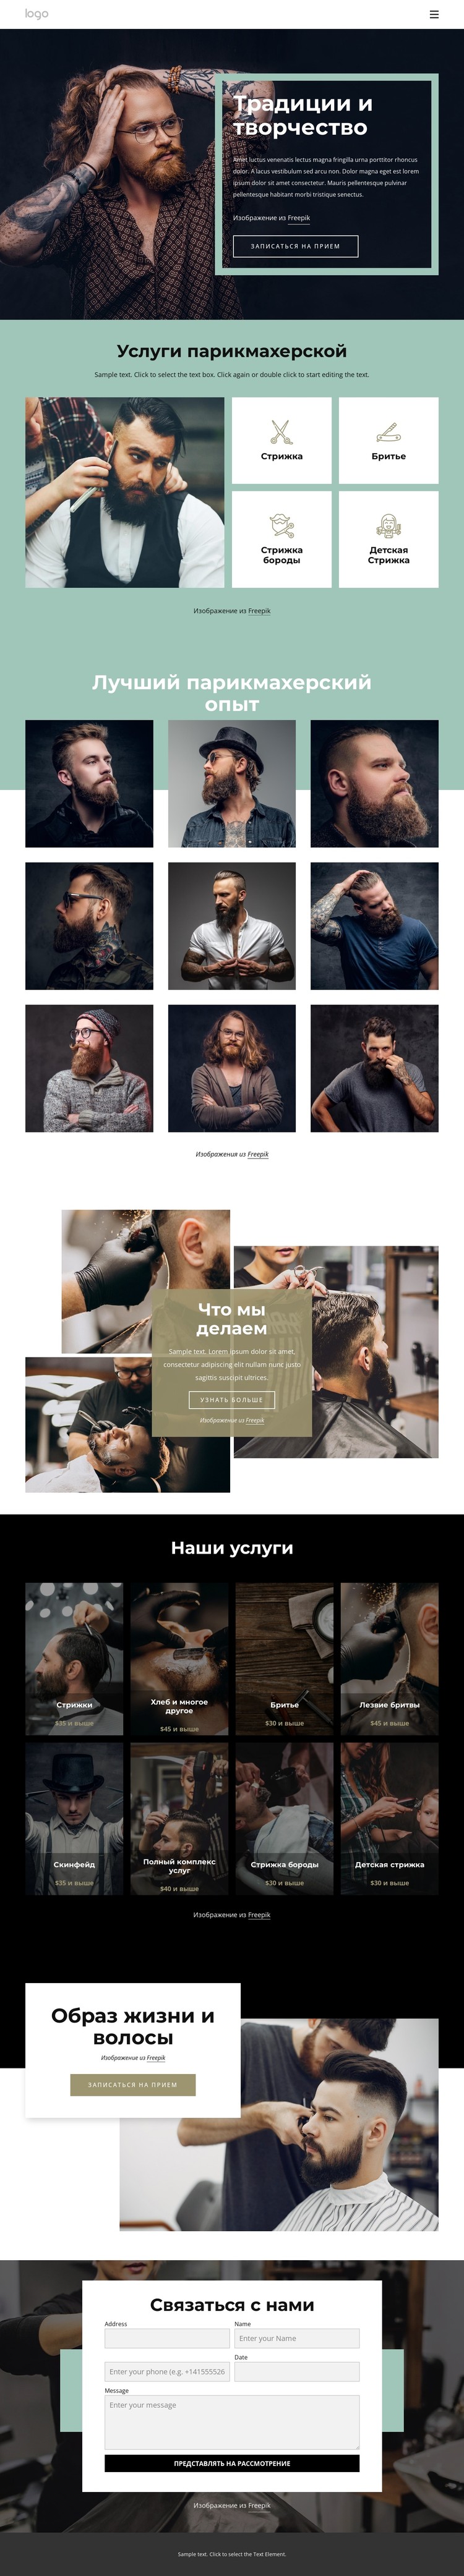 Общественный парикмахерский салон CSS шаблон